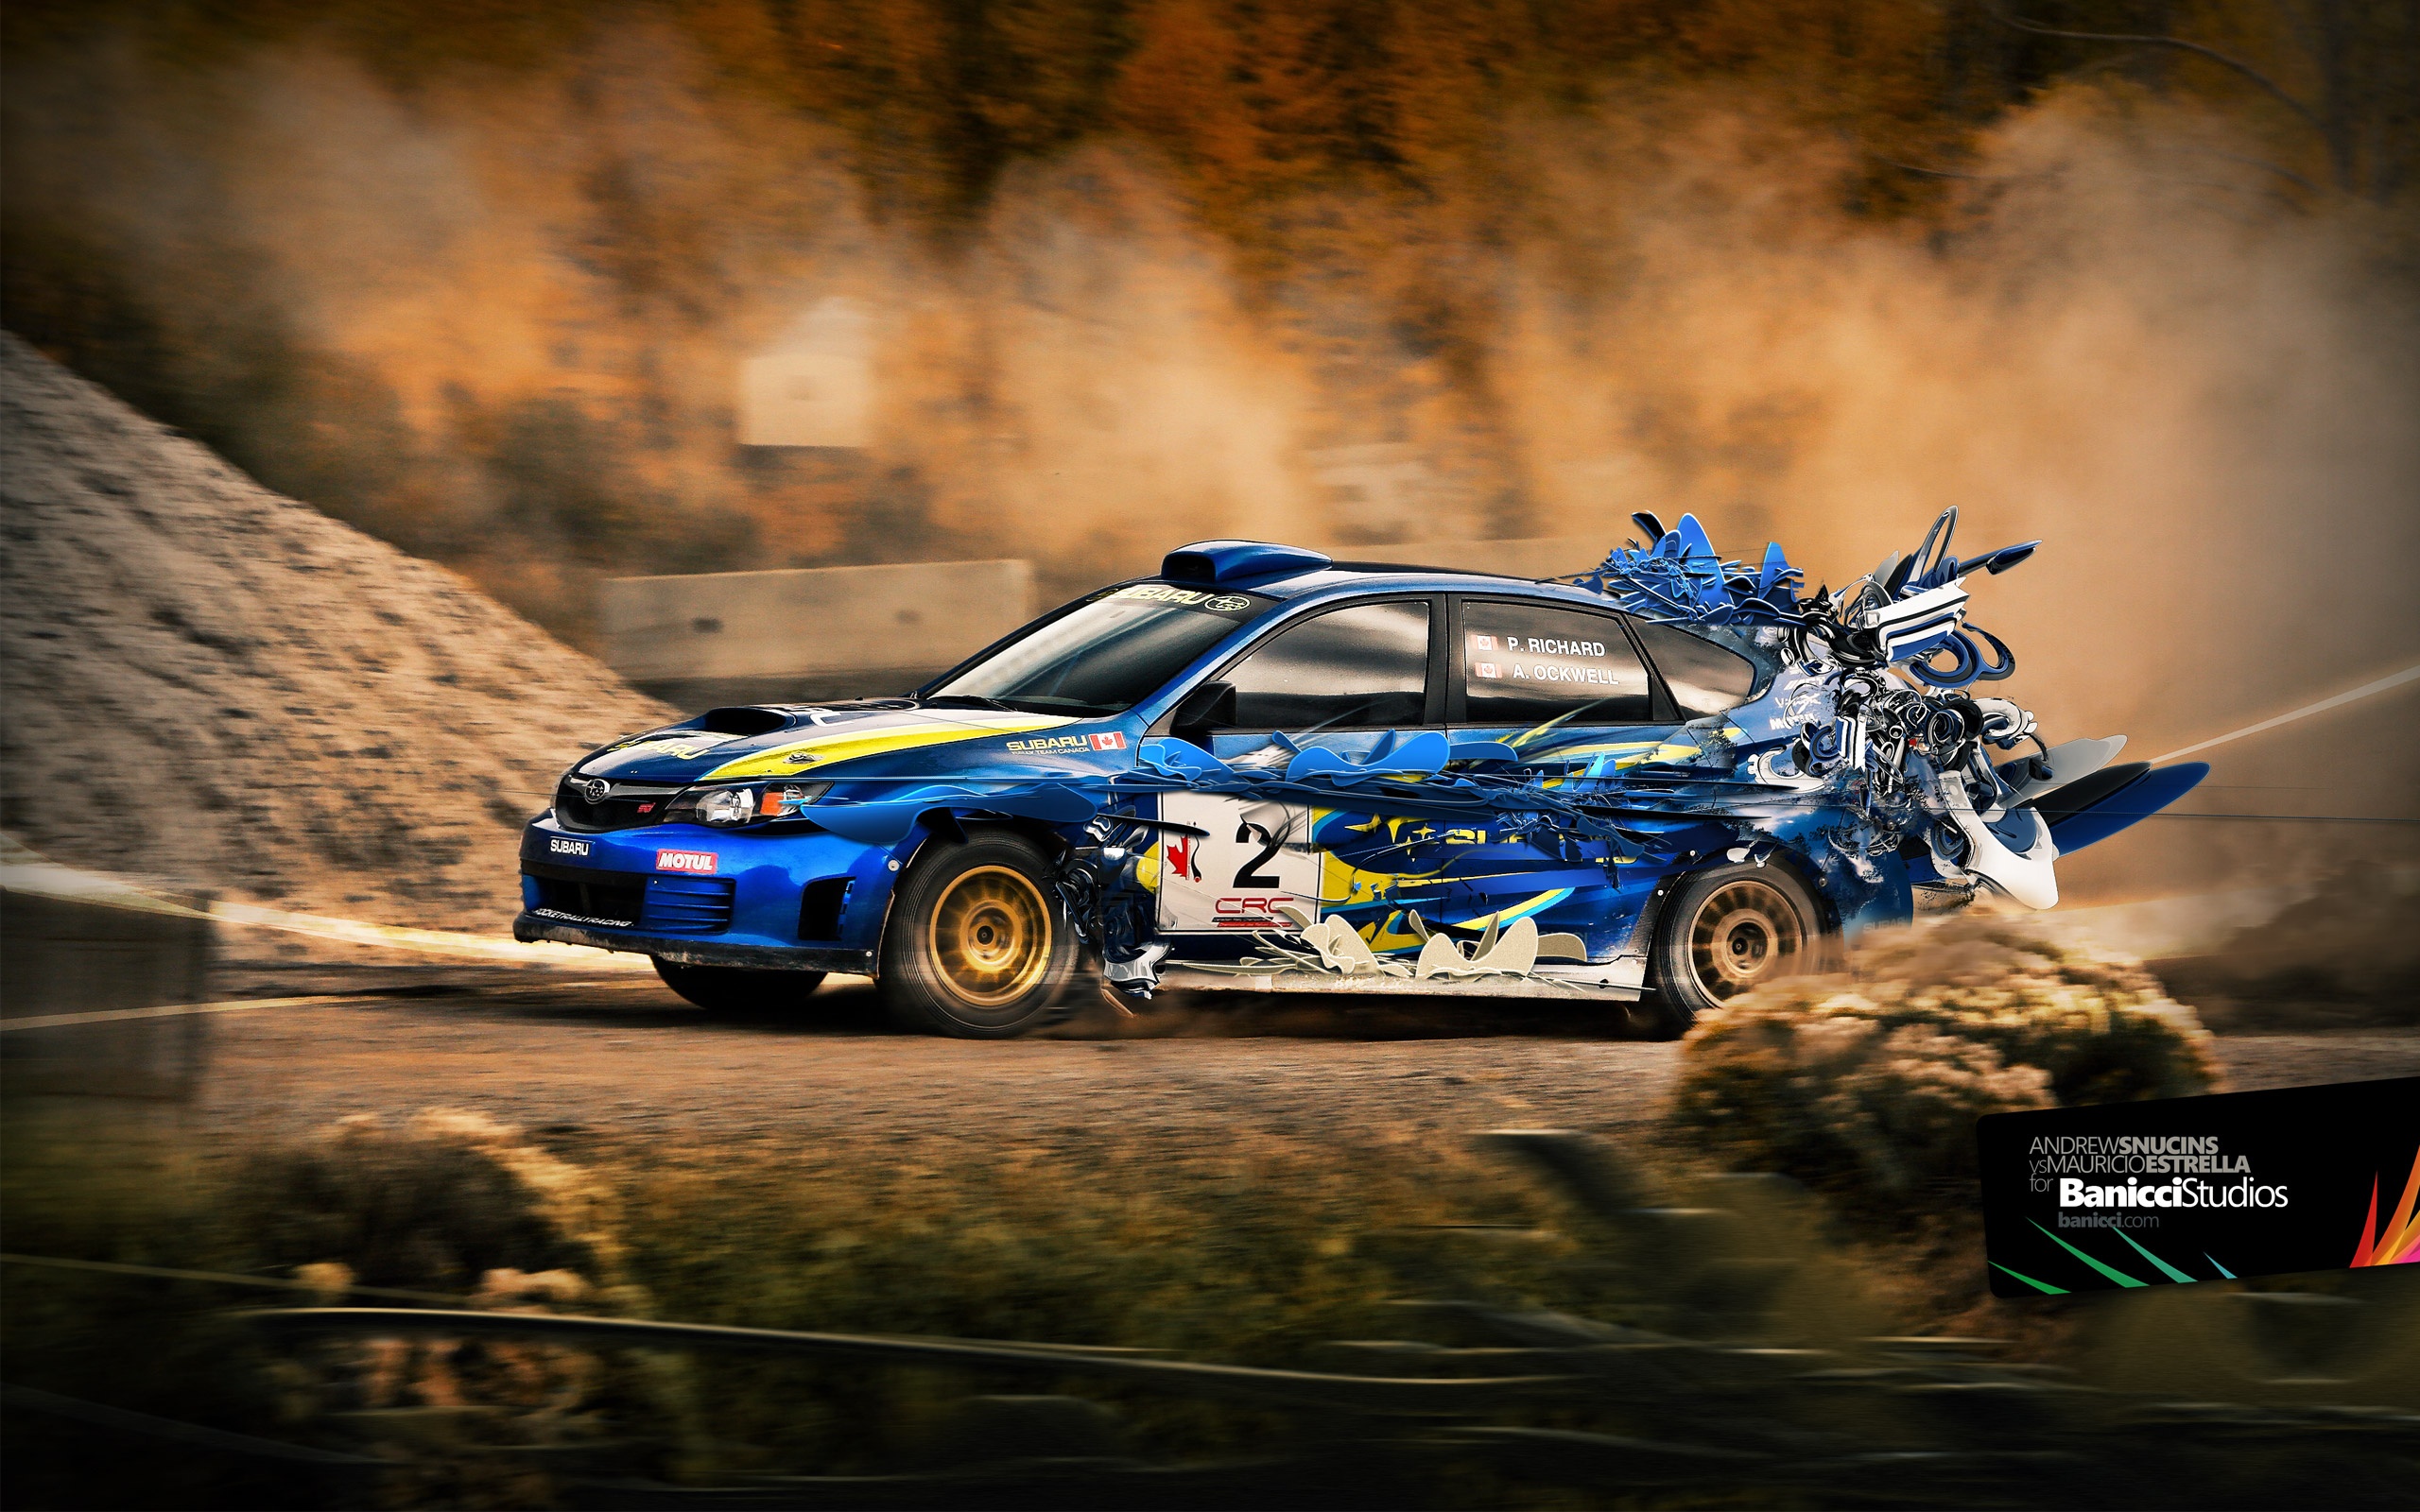 Subaru Impreza Wrx Transformation Desktop Wallpaper And Stock Photos